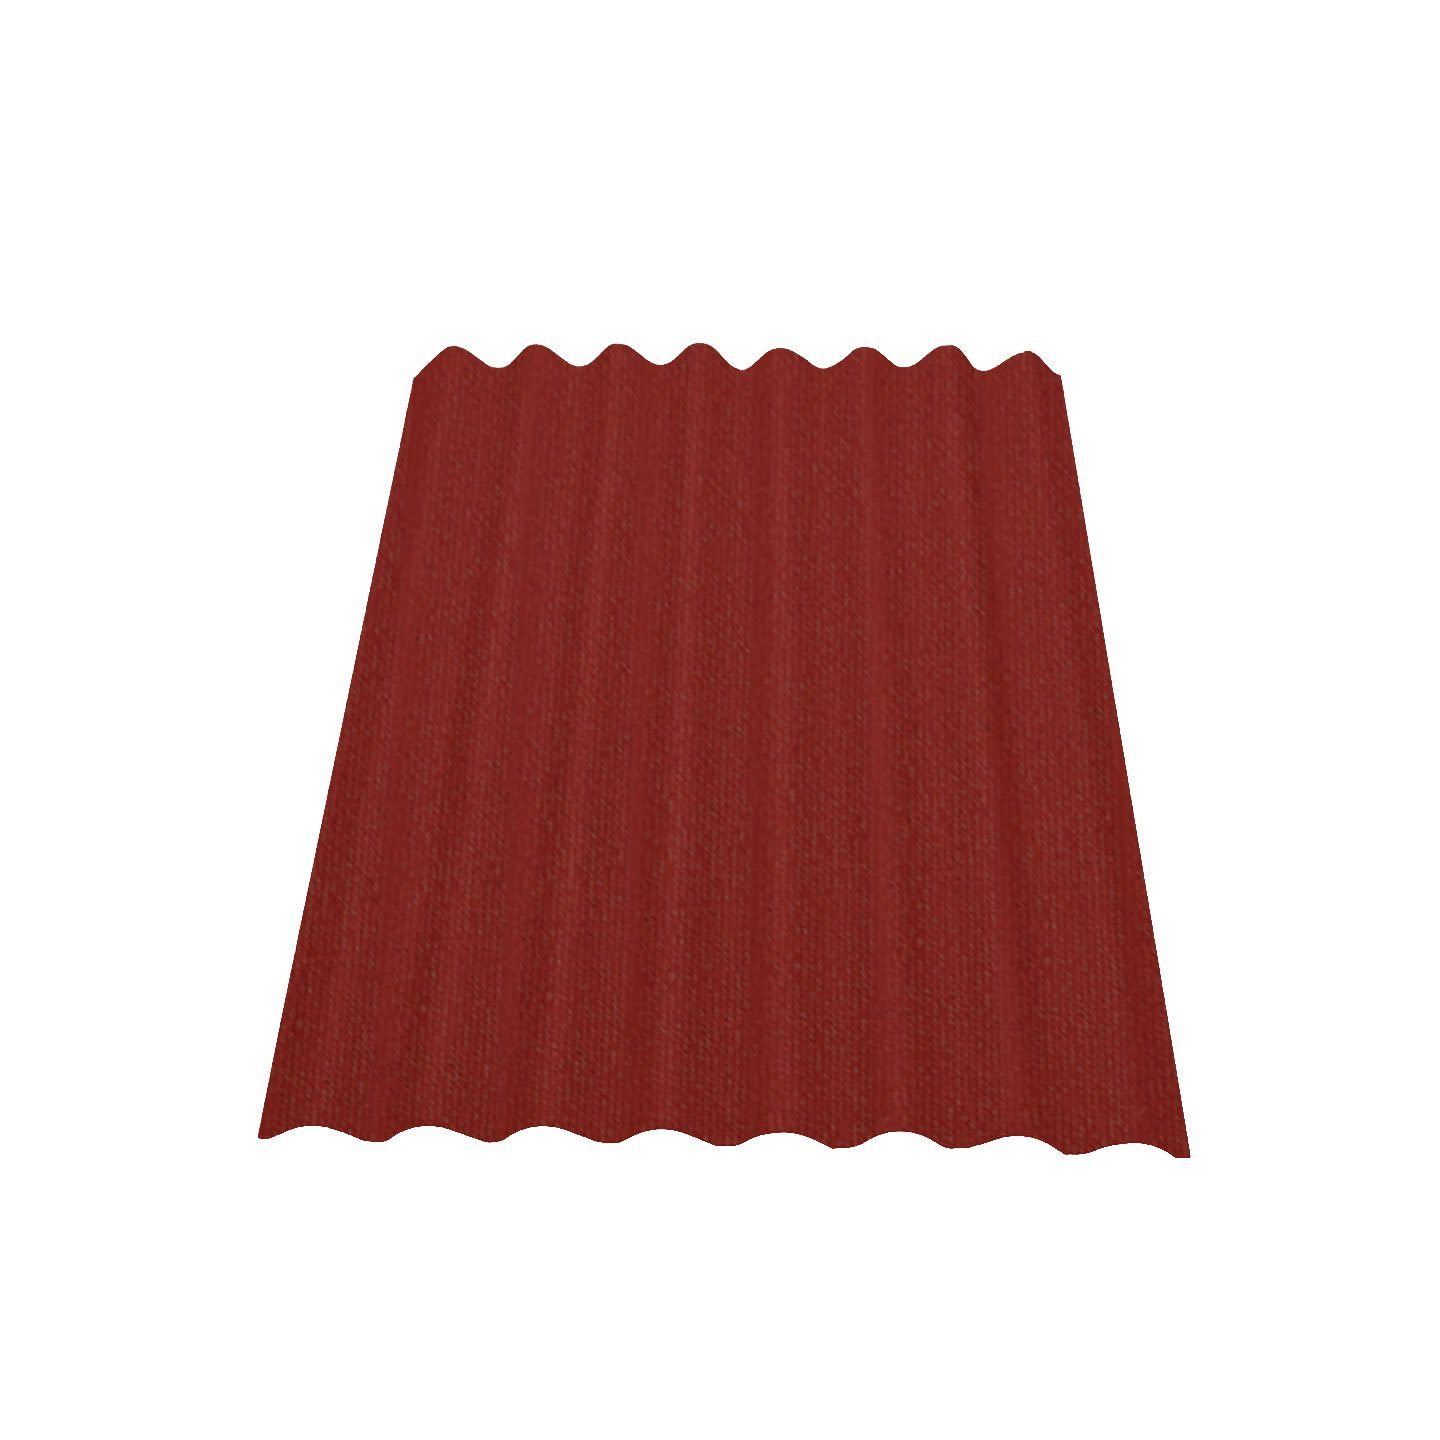 Onduline Dachpappe Onduline Easyline Dachplatte Wandplatte Bitumen Wellplatte 1x0,76m - rot, wellig, (1-St)